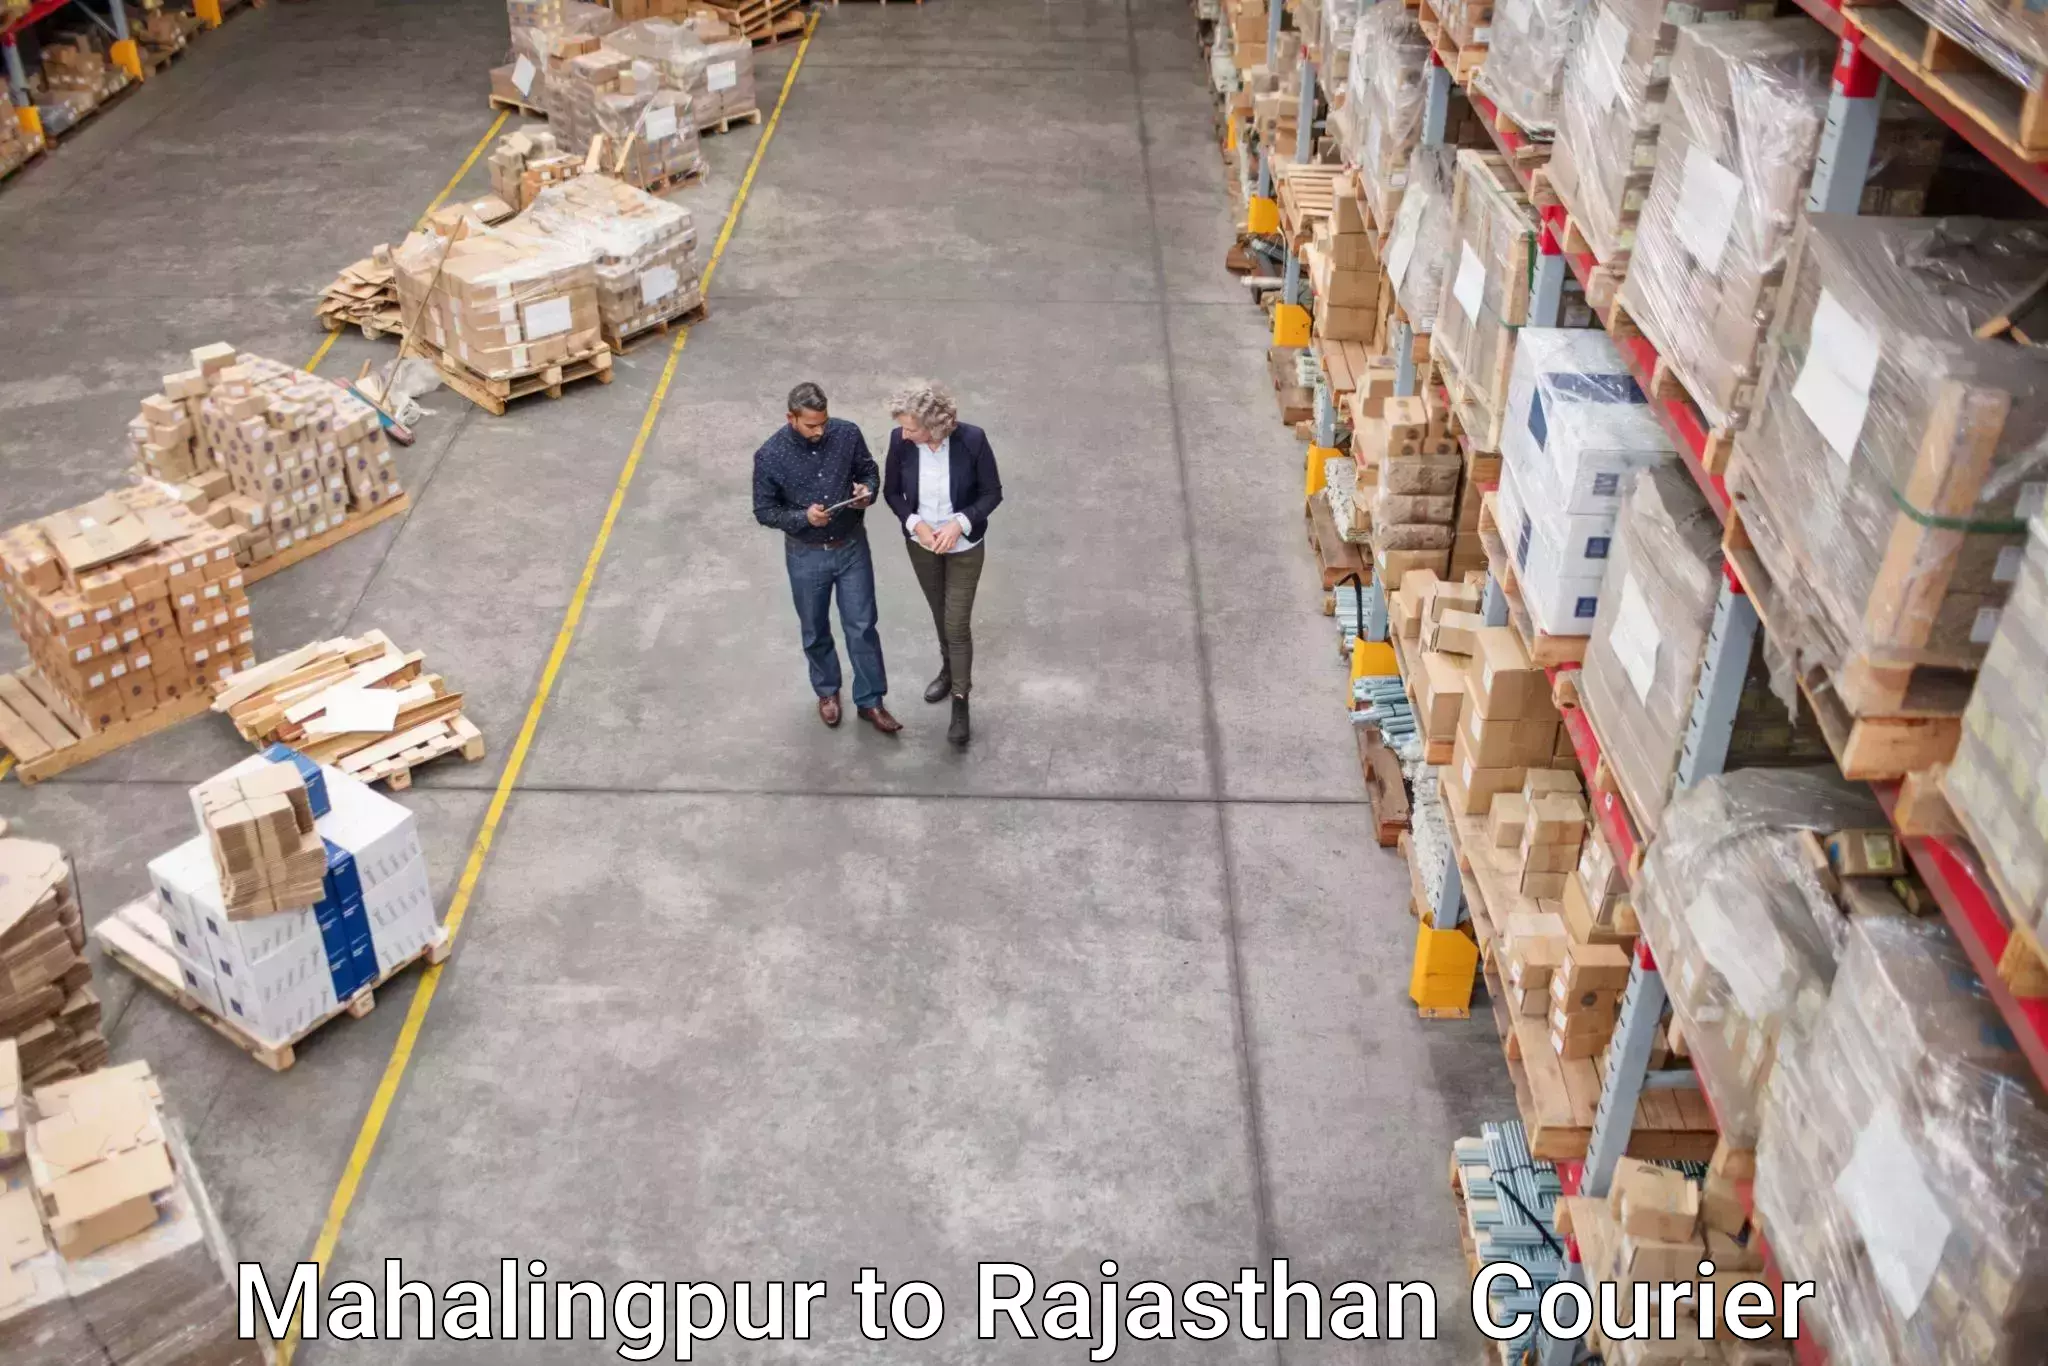 Courier service efficiency in Mahalingpur to Chaksu